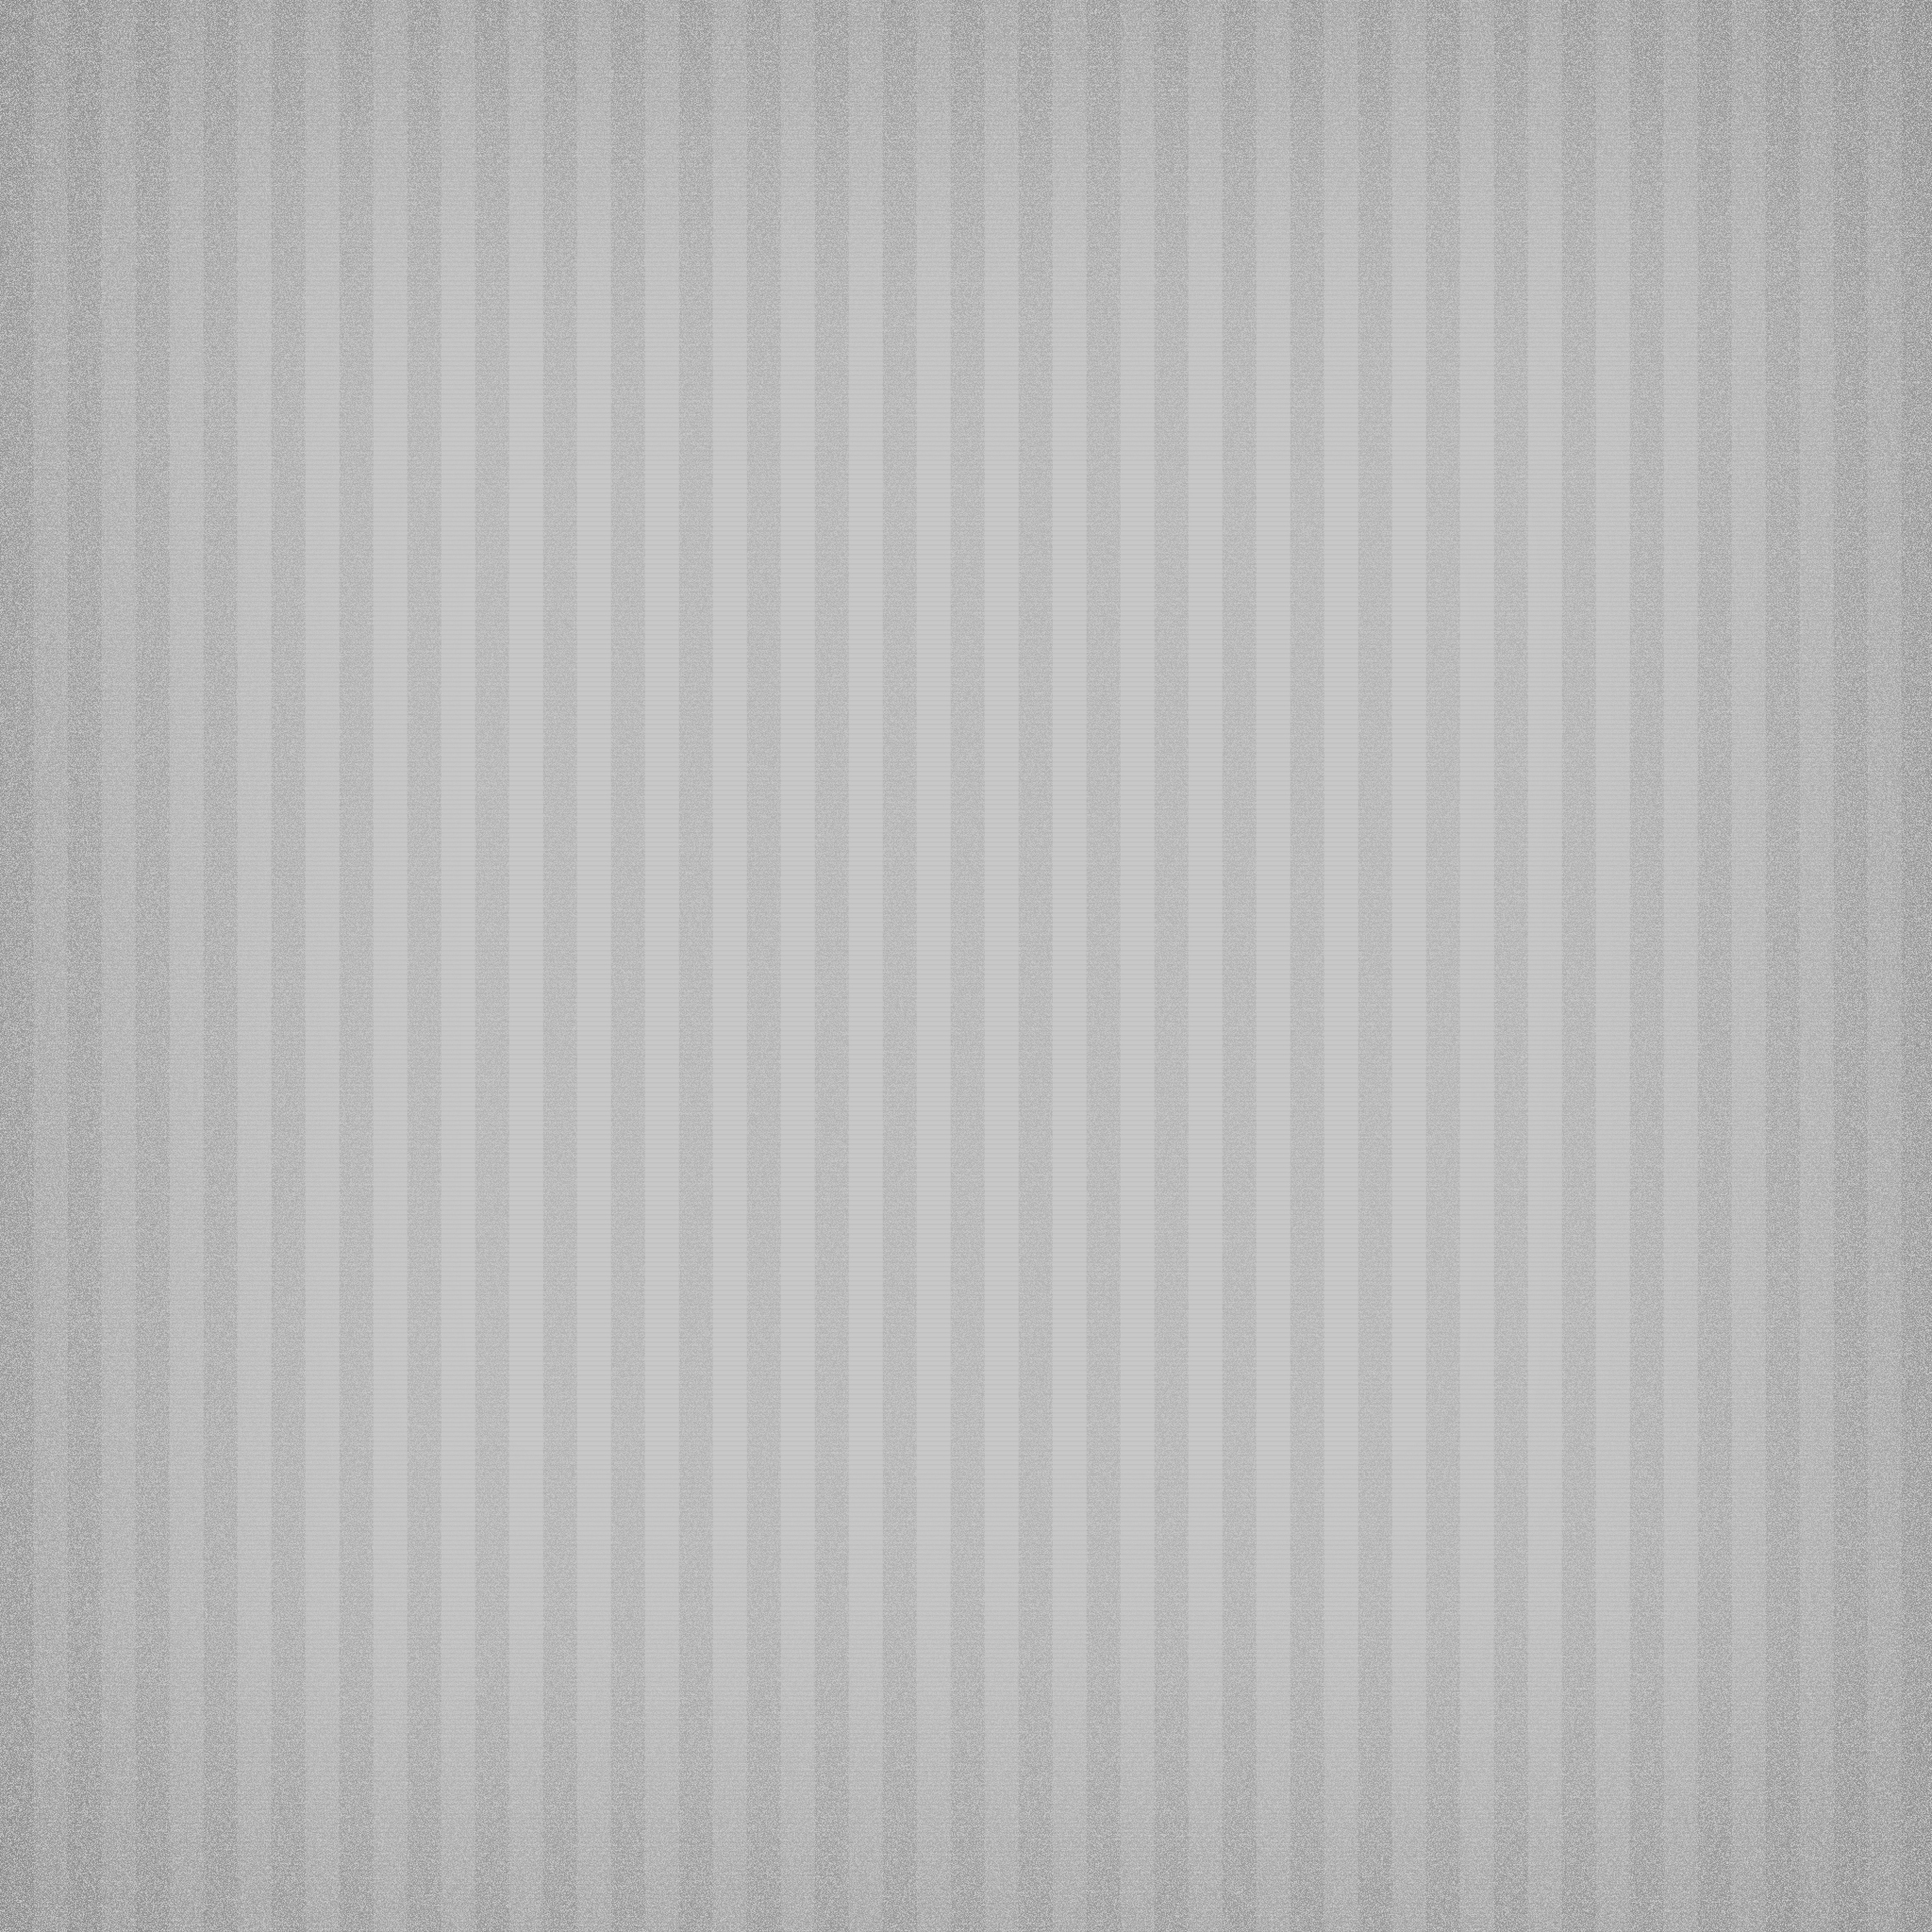 iPad 3 Simple Grey Lines Pattern Wallpaper by Edmonam